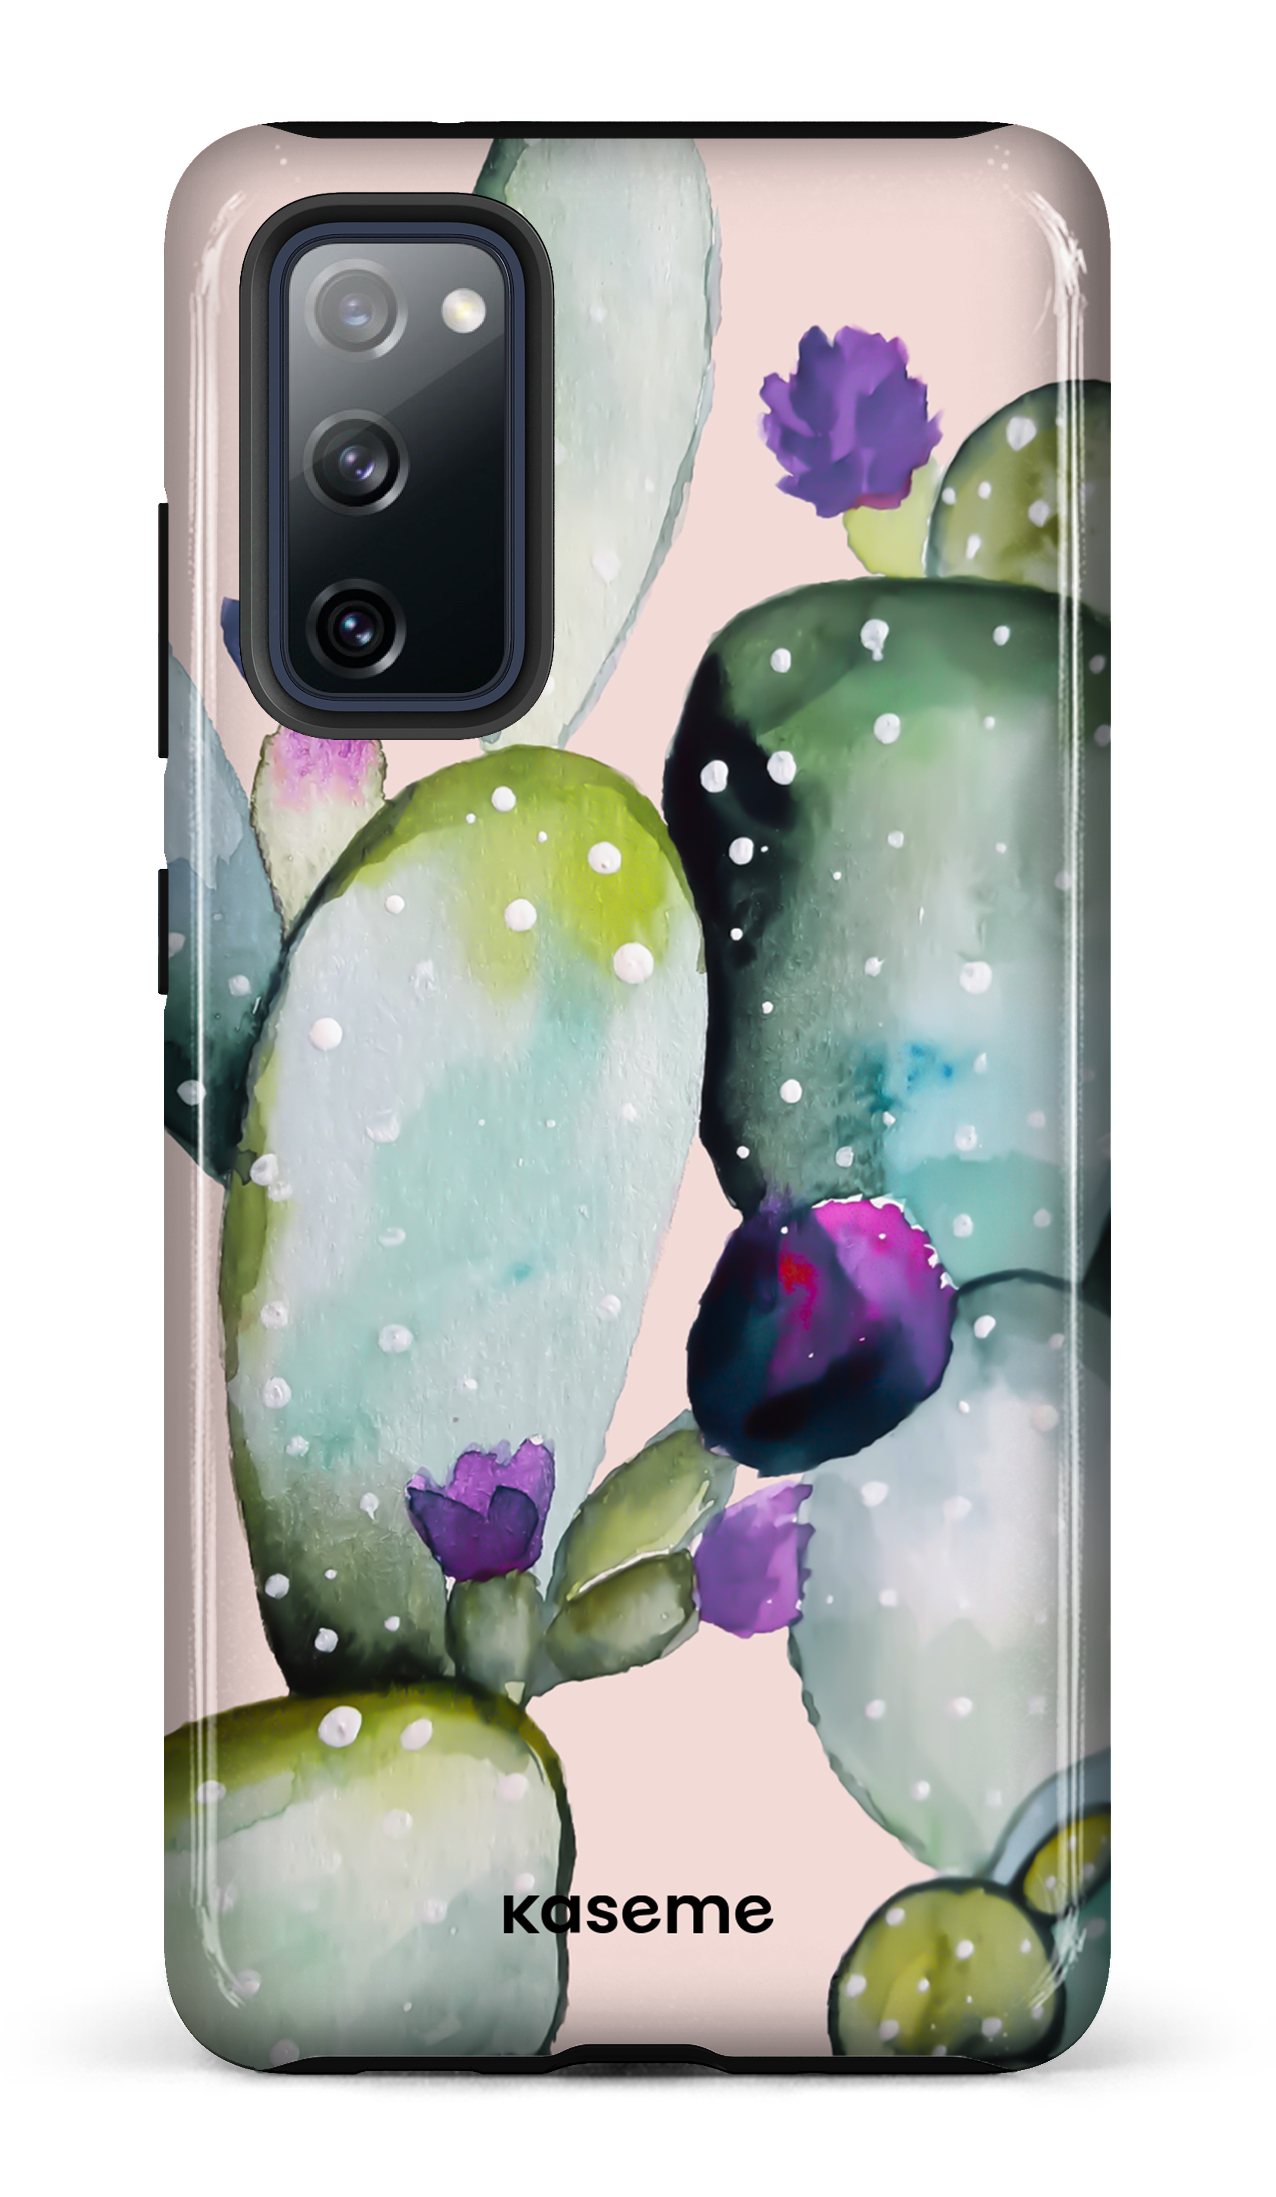 Cactus Flower - Galaxy S20 FE